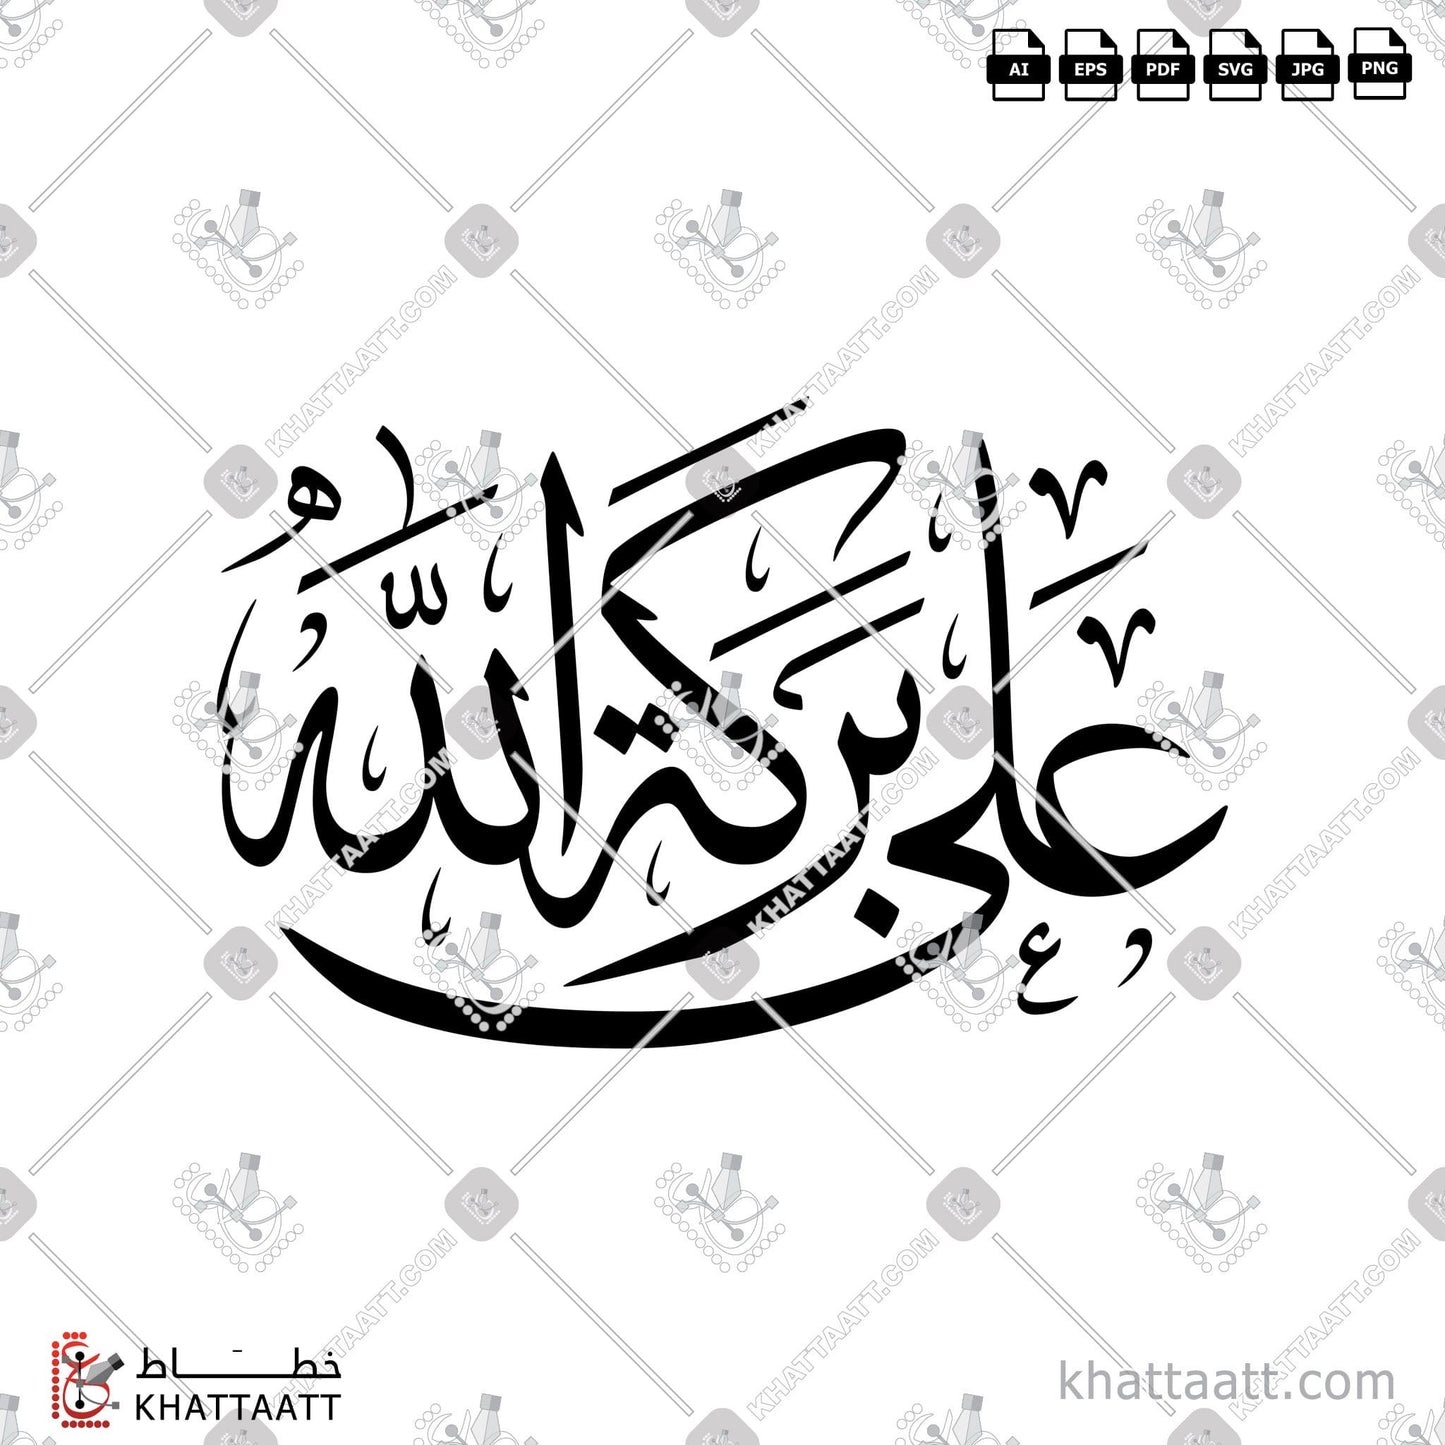 Download Arabic Calligraphy of Ala Barakatillah - على بركة الله in Thuluth - خط الثلث in vector and .png